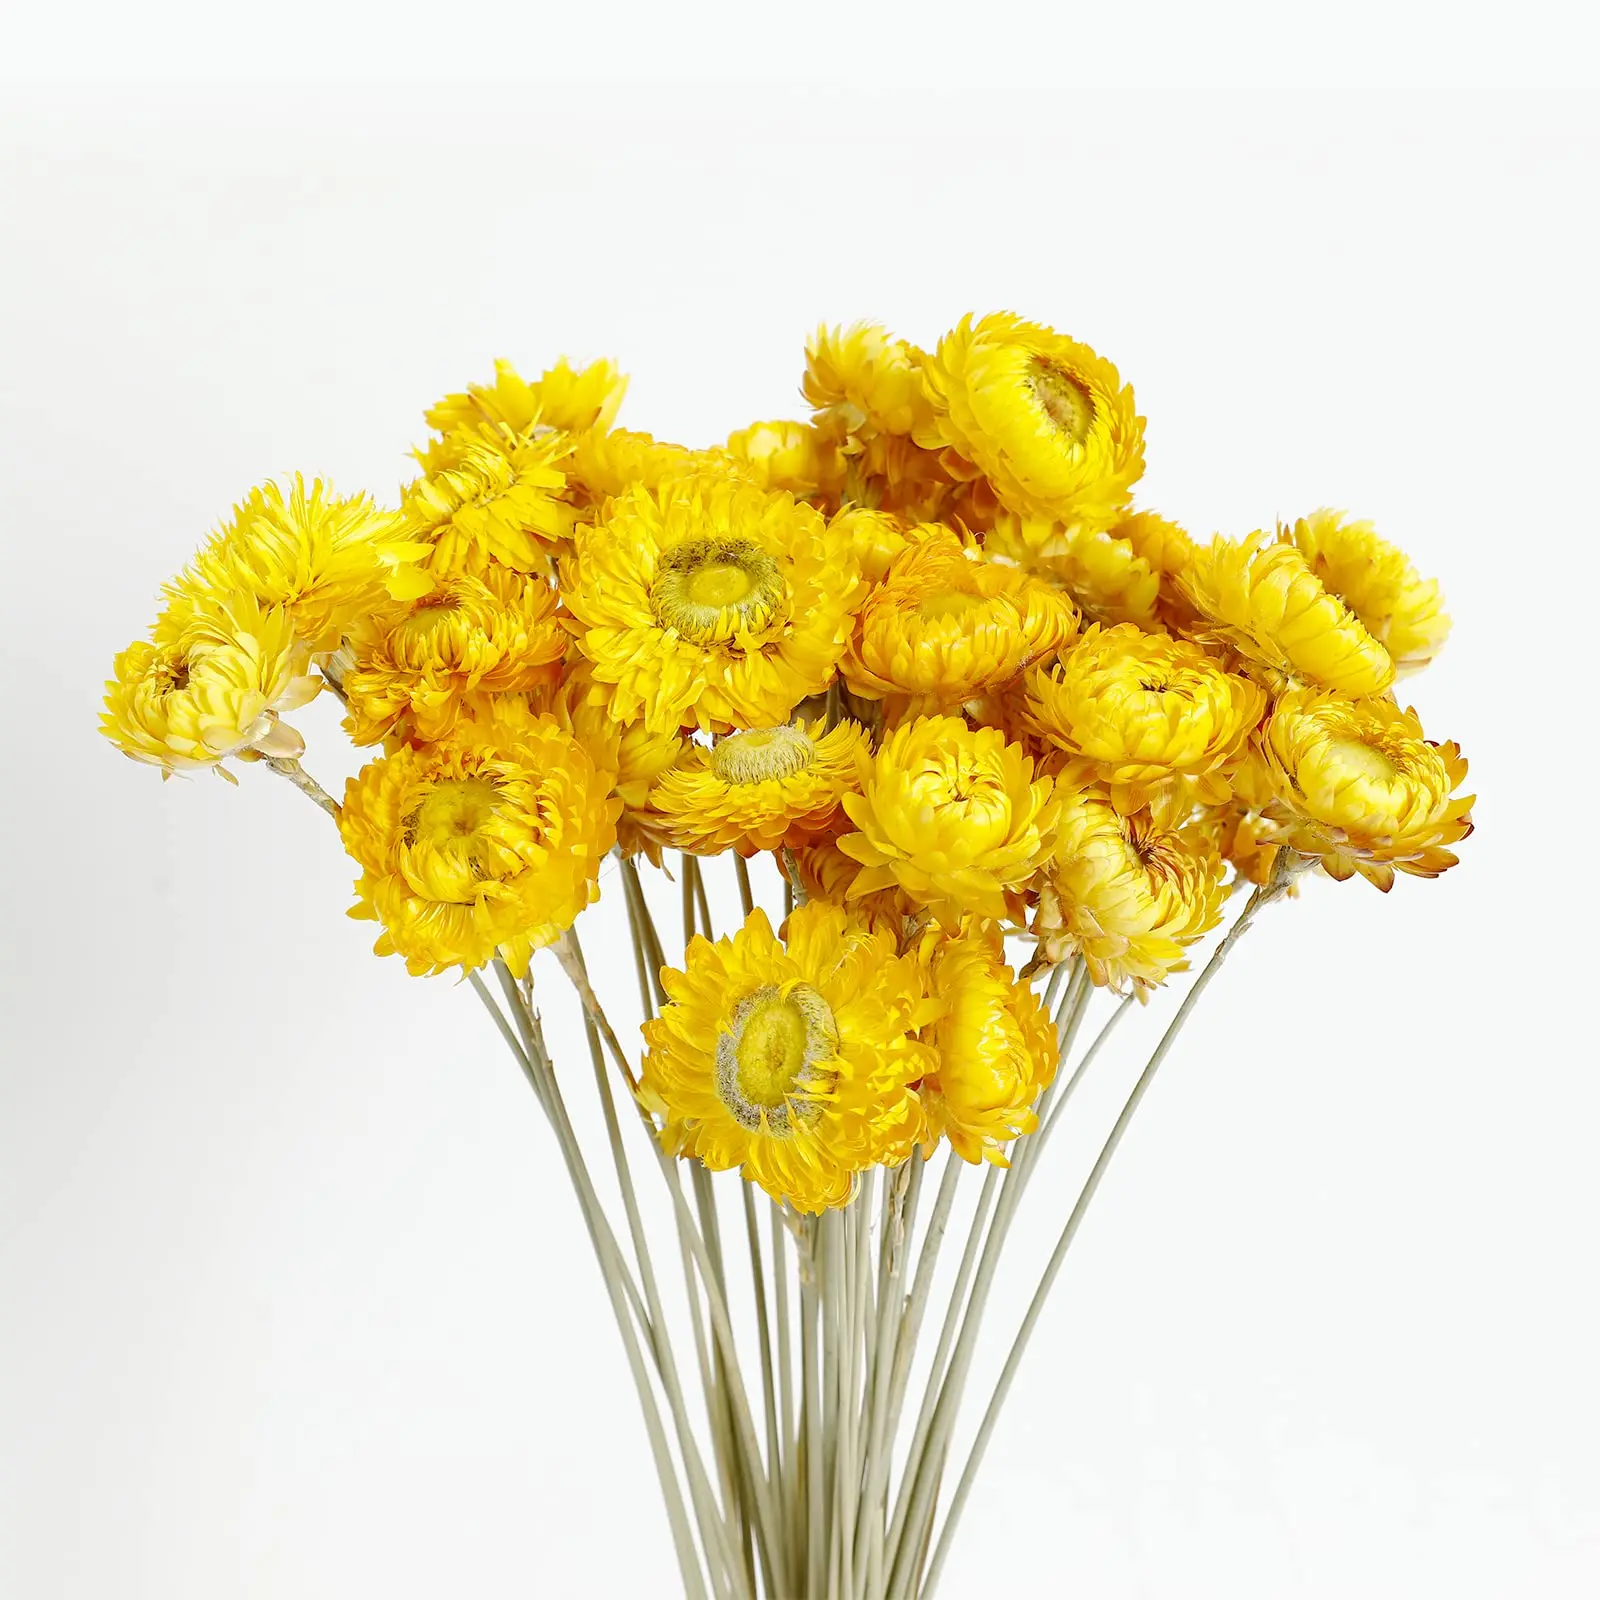 

Daisy Dried Flower Bouquet 100%Natural Chrysanthemum Dry Flower for Wedding Centerpieces Home Decor DIY Bridal Bouquet Material